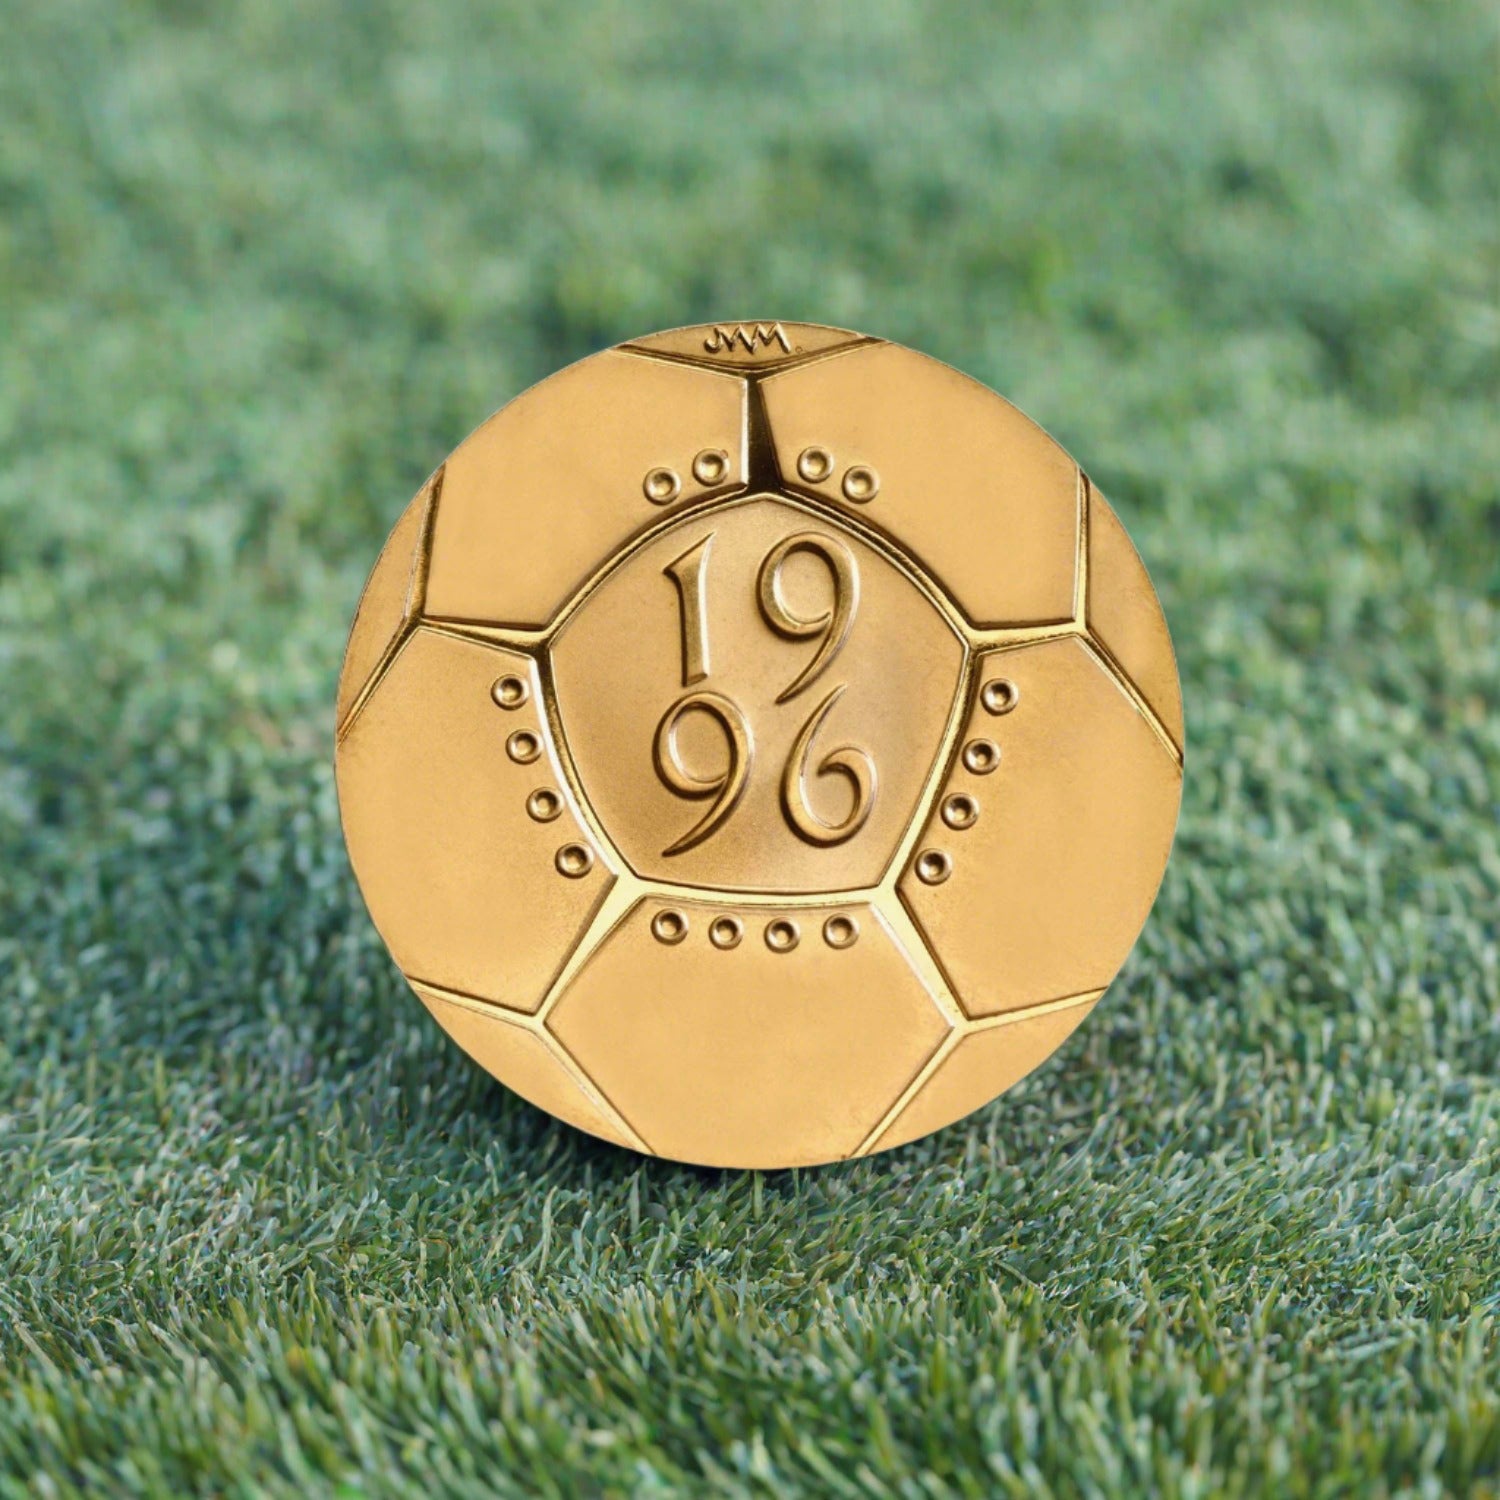 EURO '96 Celebration of Football 1996 UK £2 Coin